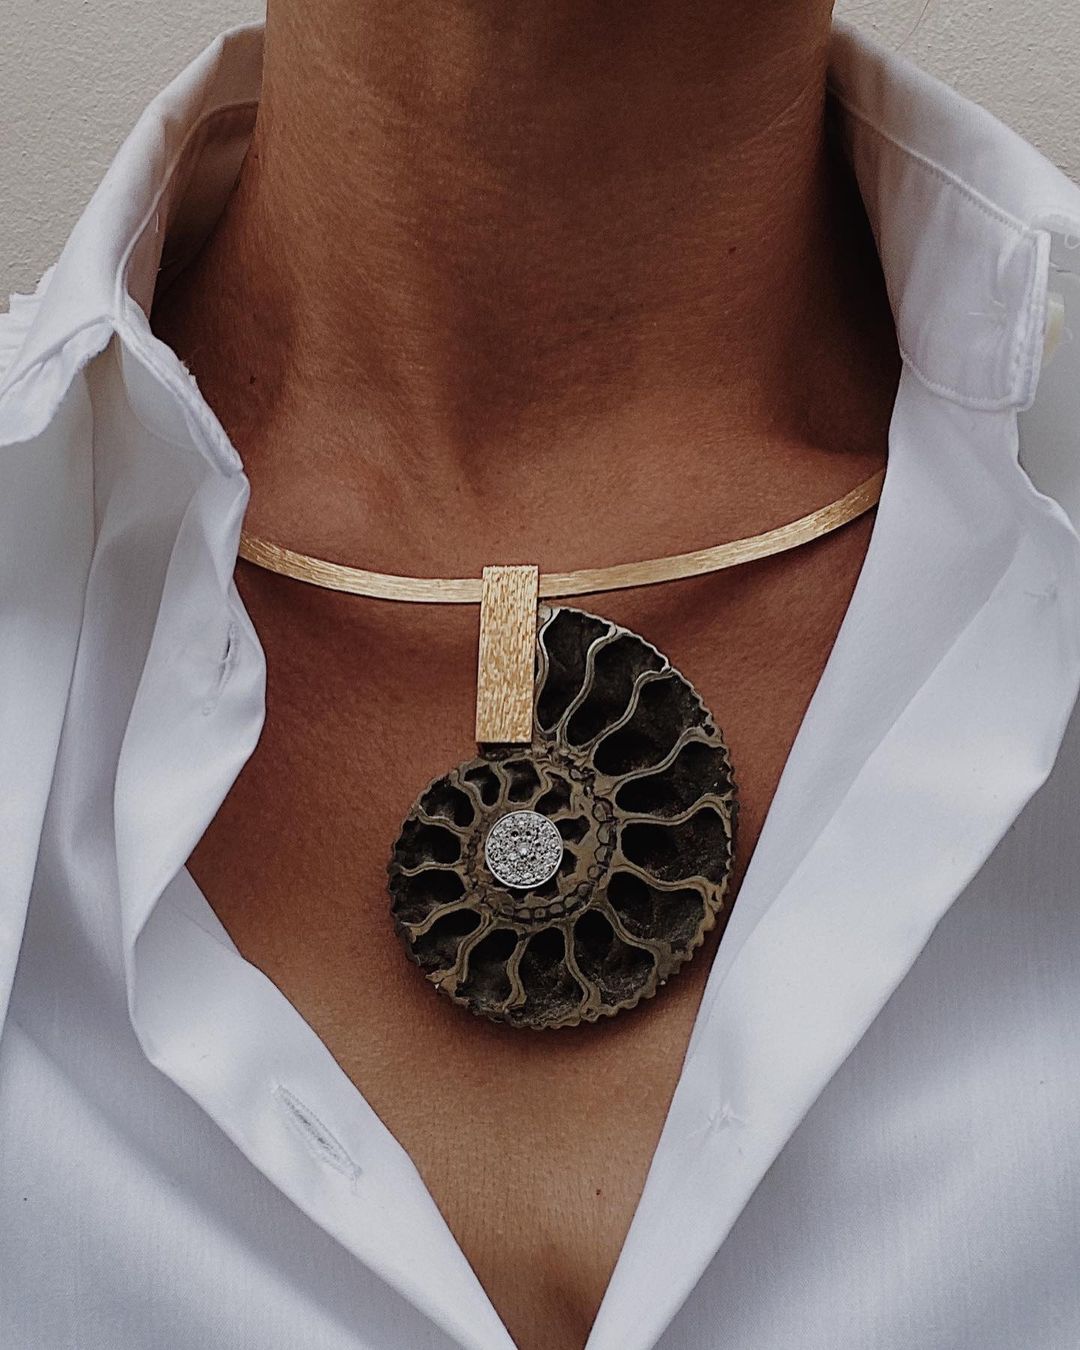 Ammonite Necklace by Francesca Grima. Image Courtesy of F Grima